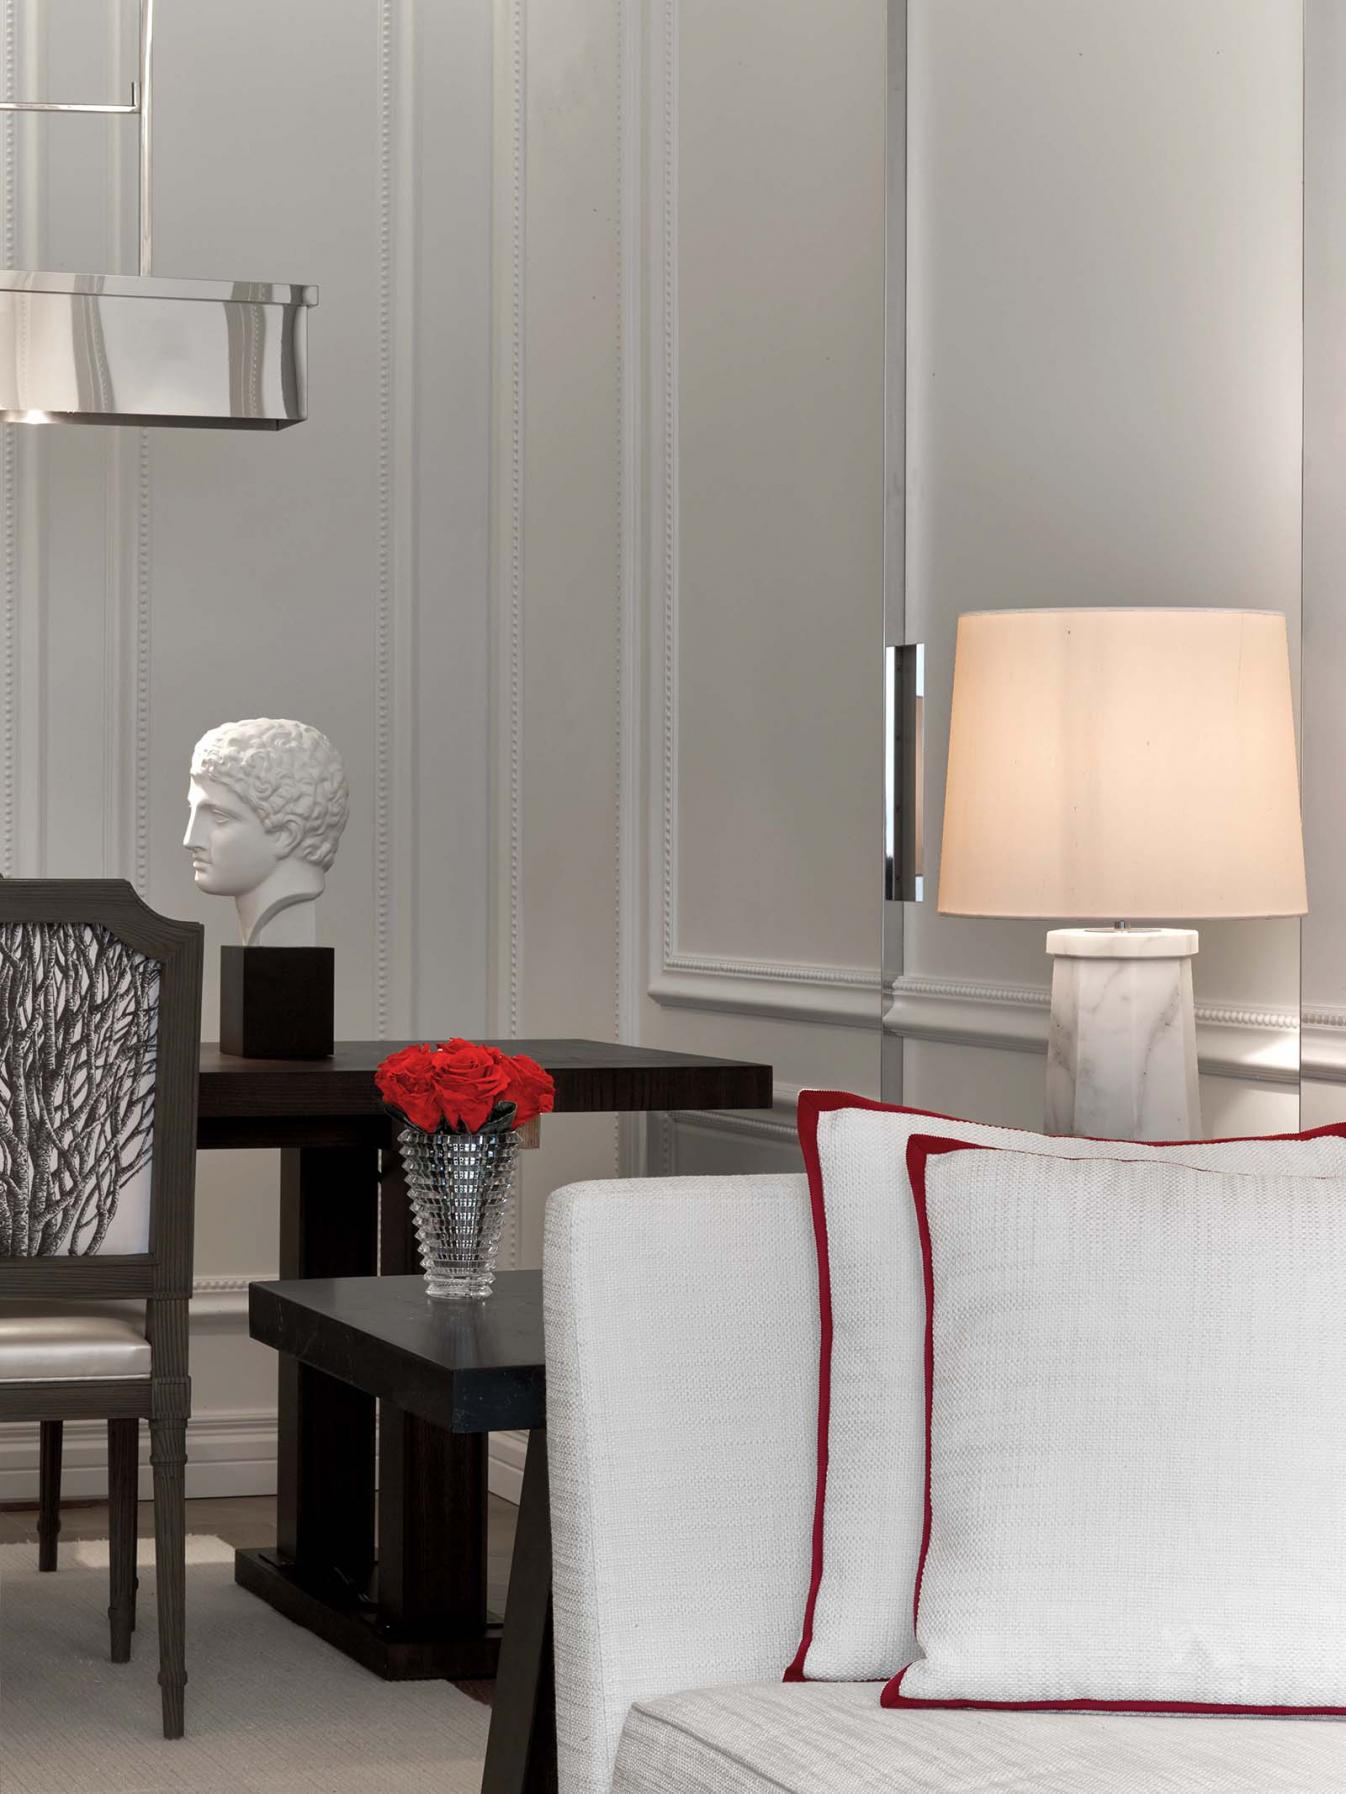 Baccarat Hotel prestige suite room sculpture, chair